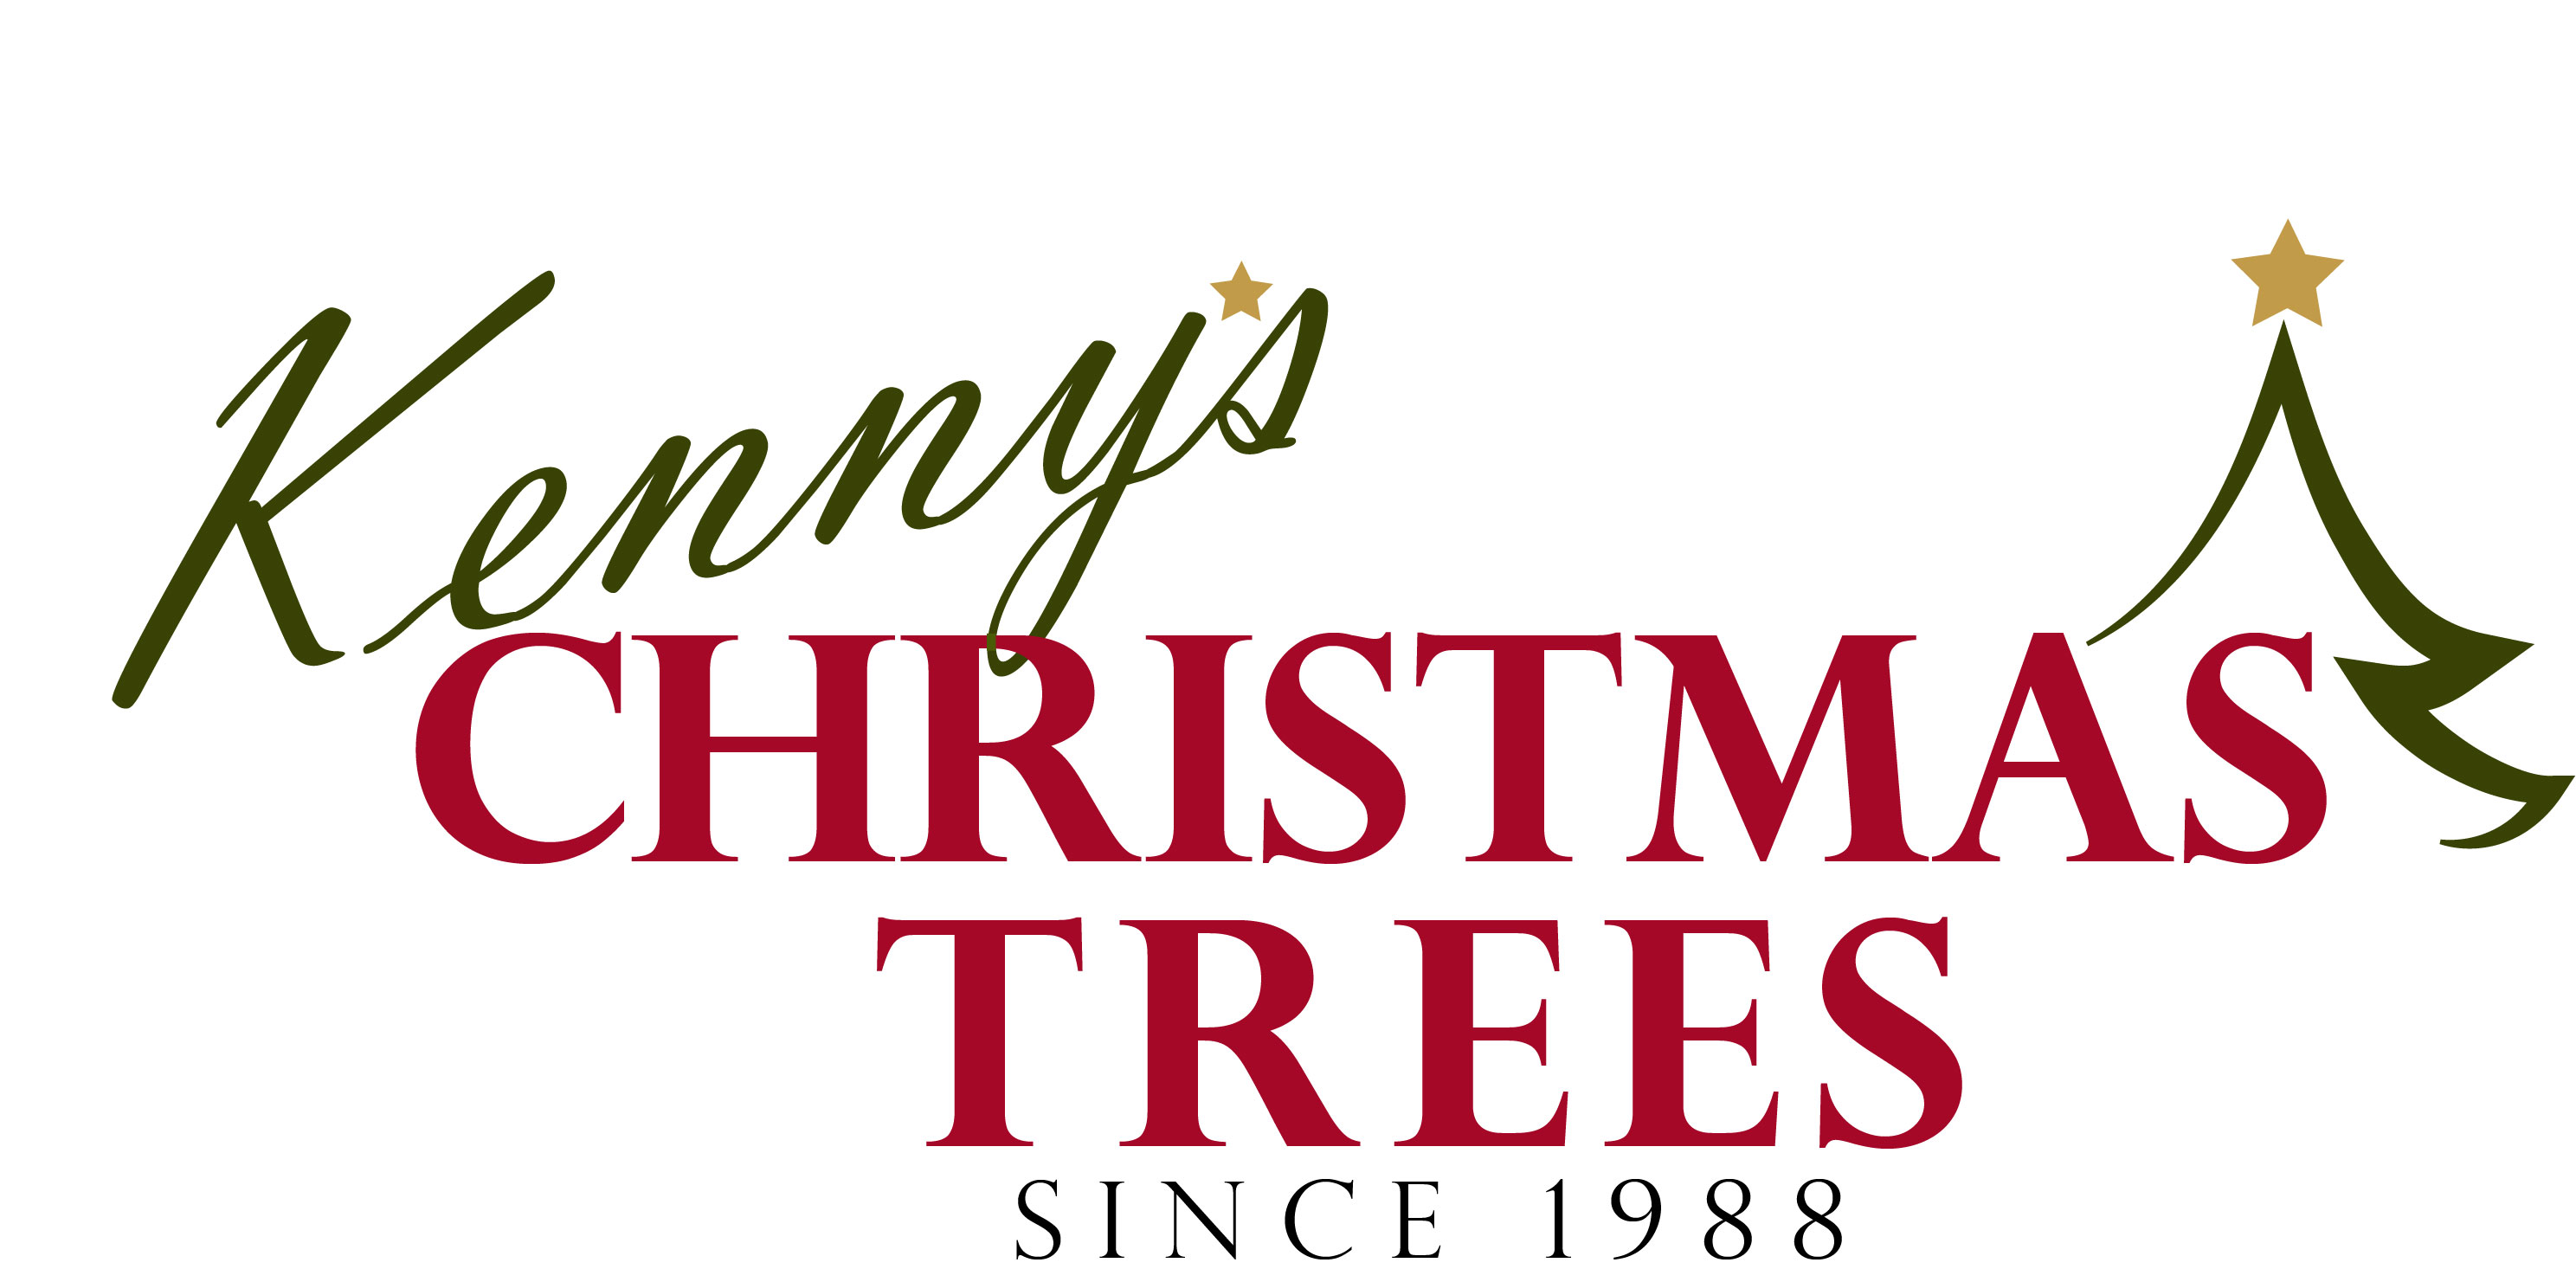 Kenny's Christmas Trees